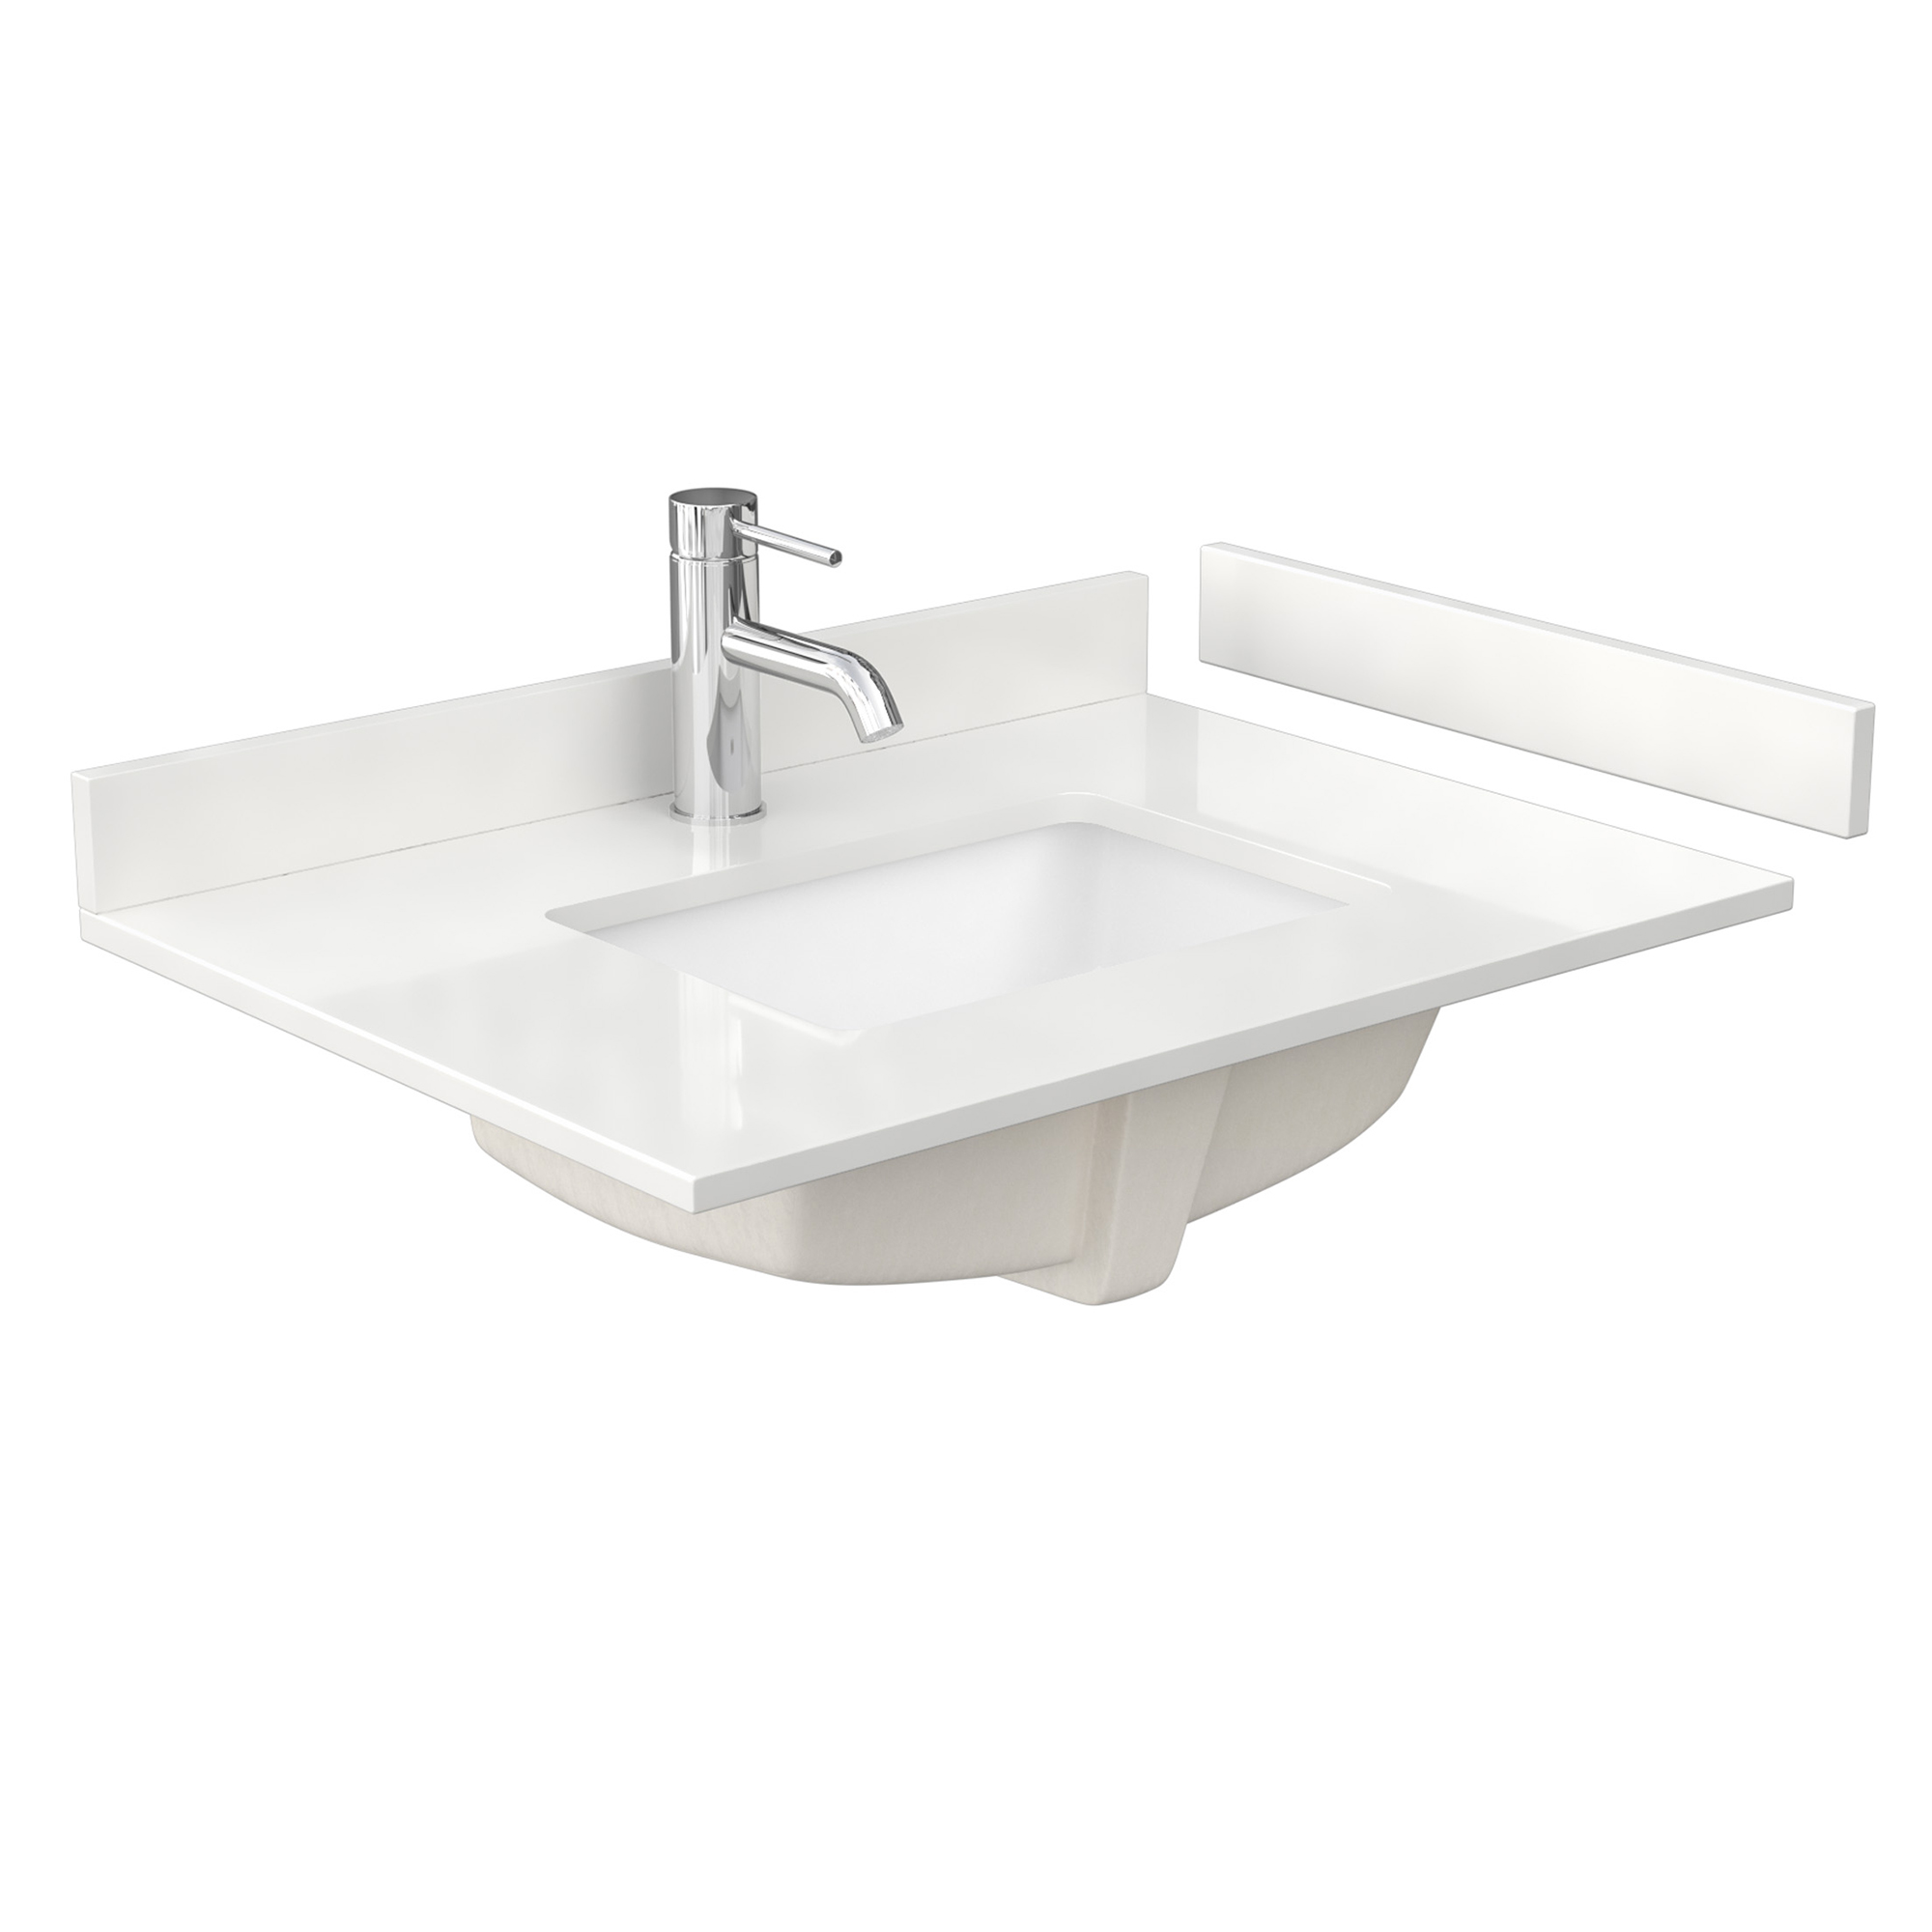 30" Single Countertop - White Quartz (1000) with Undermount Square Sink (1-Hole) - Includes Backsplash and Sidesplash WCFQC130STOPUNSWQ